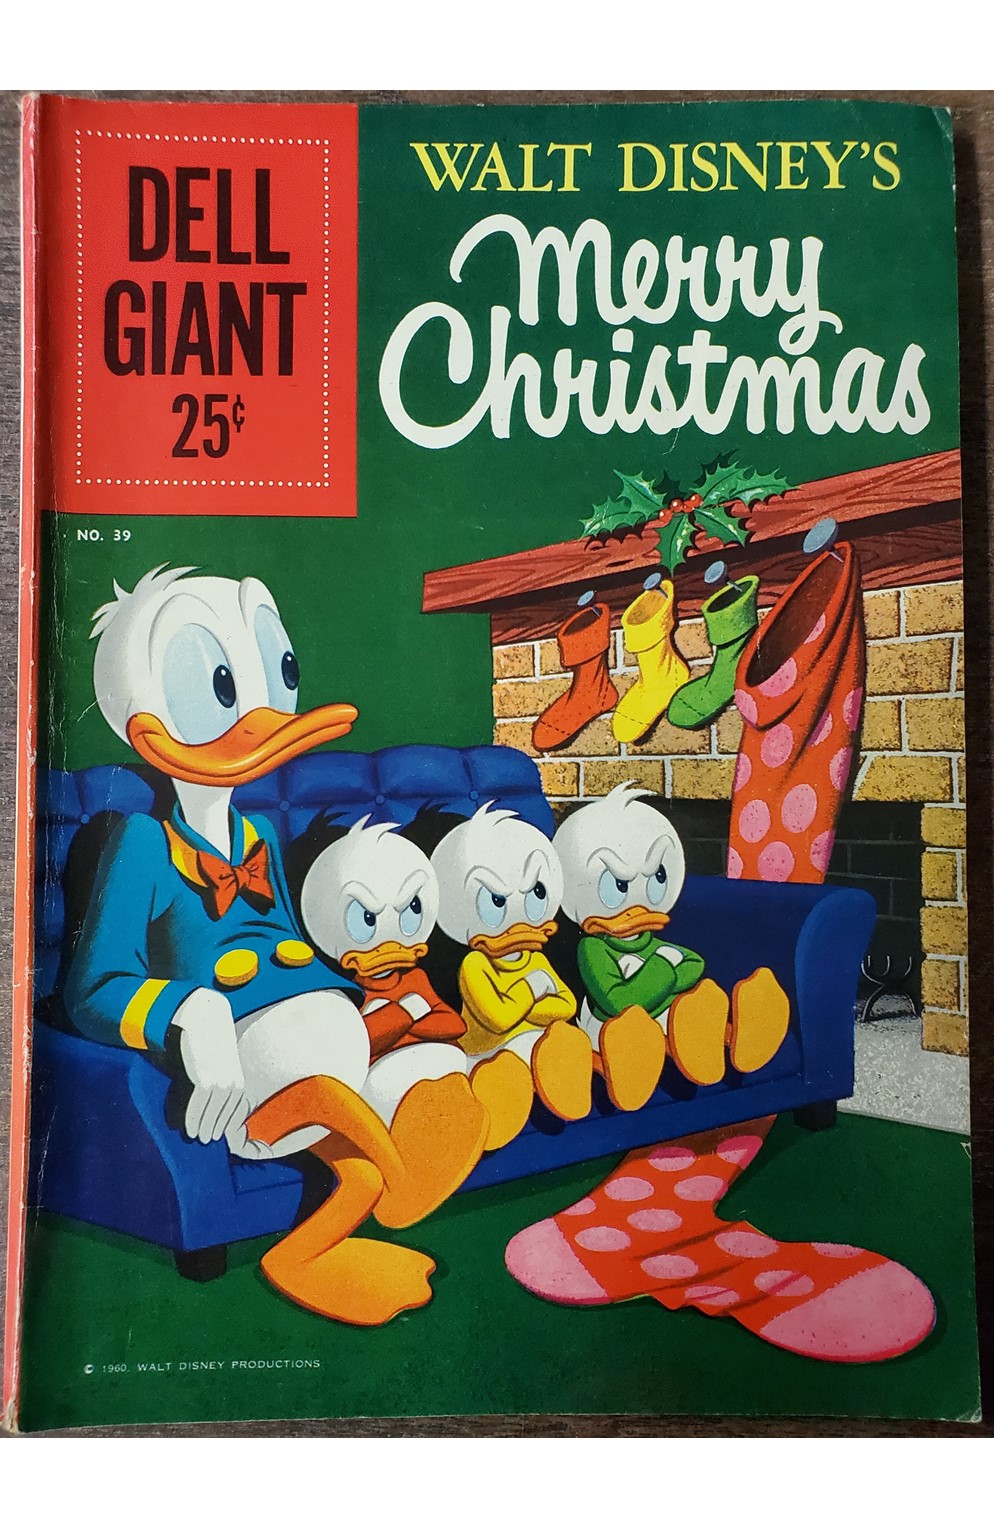 Dell Giant #39 (Dell 1960) Walt Disney's Merry Christmas